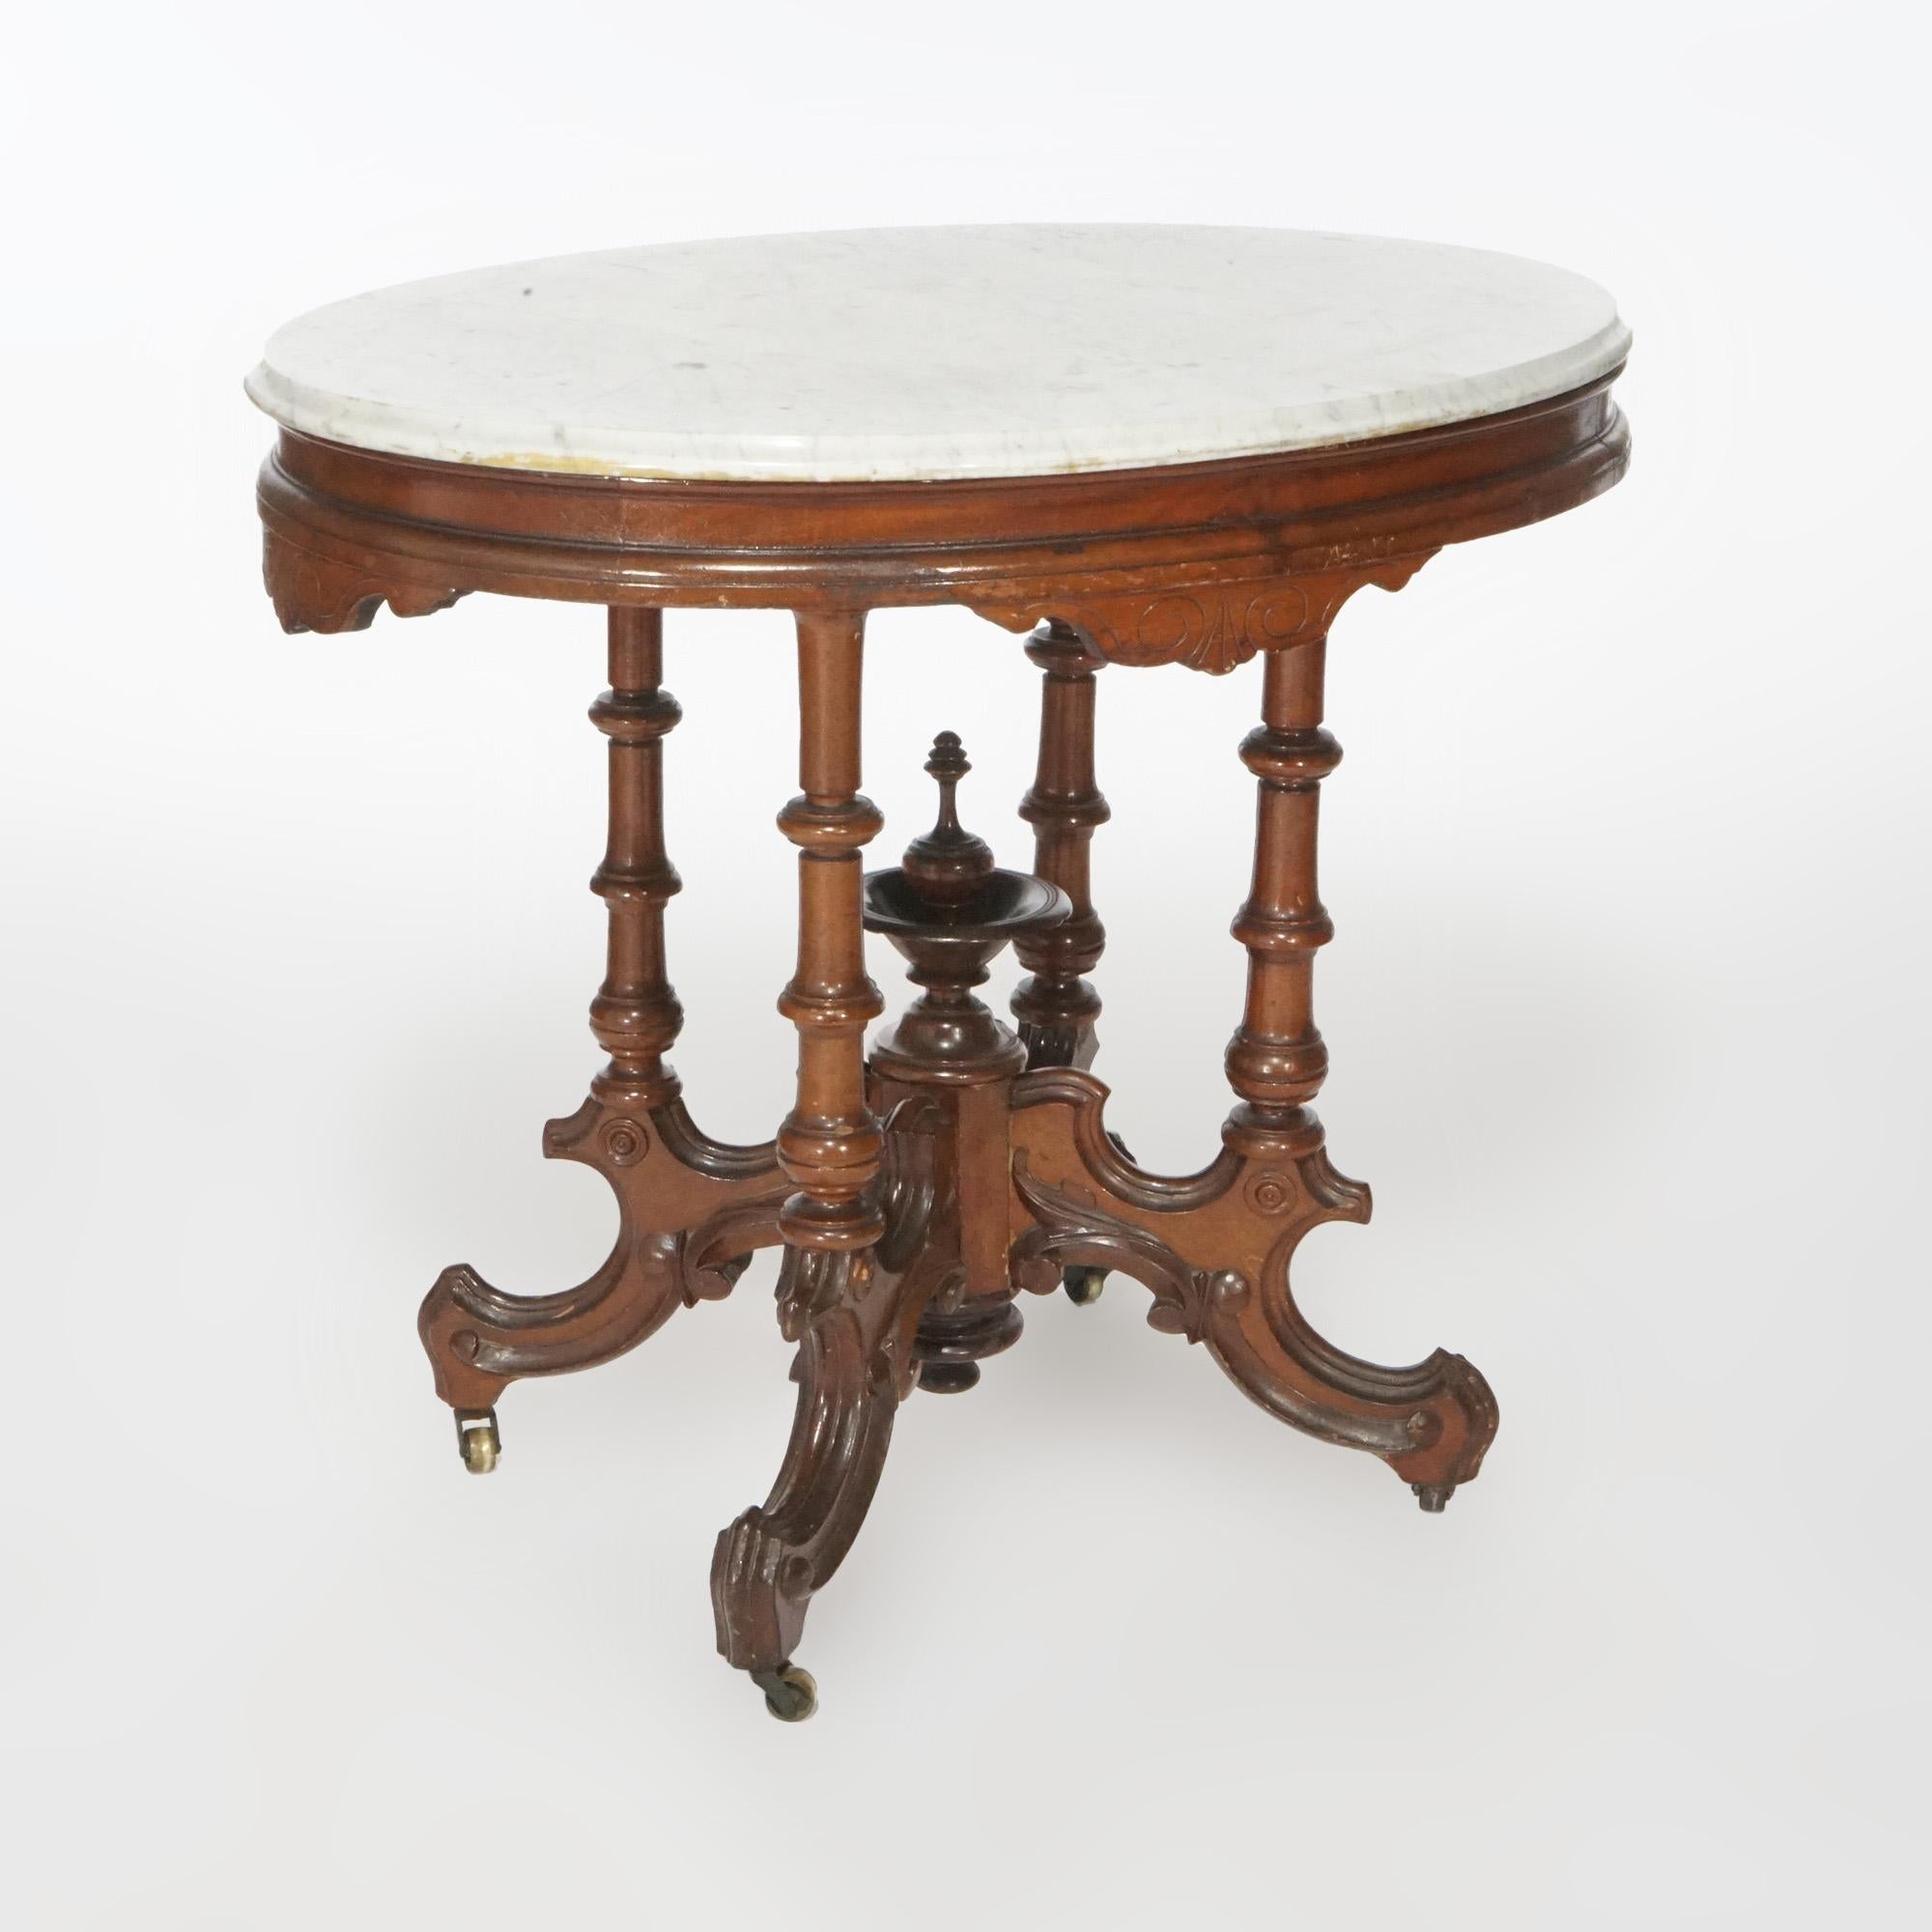 Antique Renaissance Revival Walnut Oval Marble Top Parlor Table, circa 1890 For Sale 4